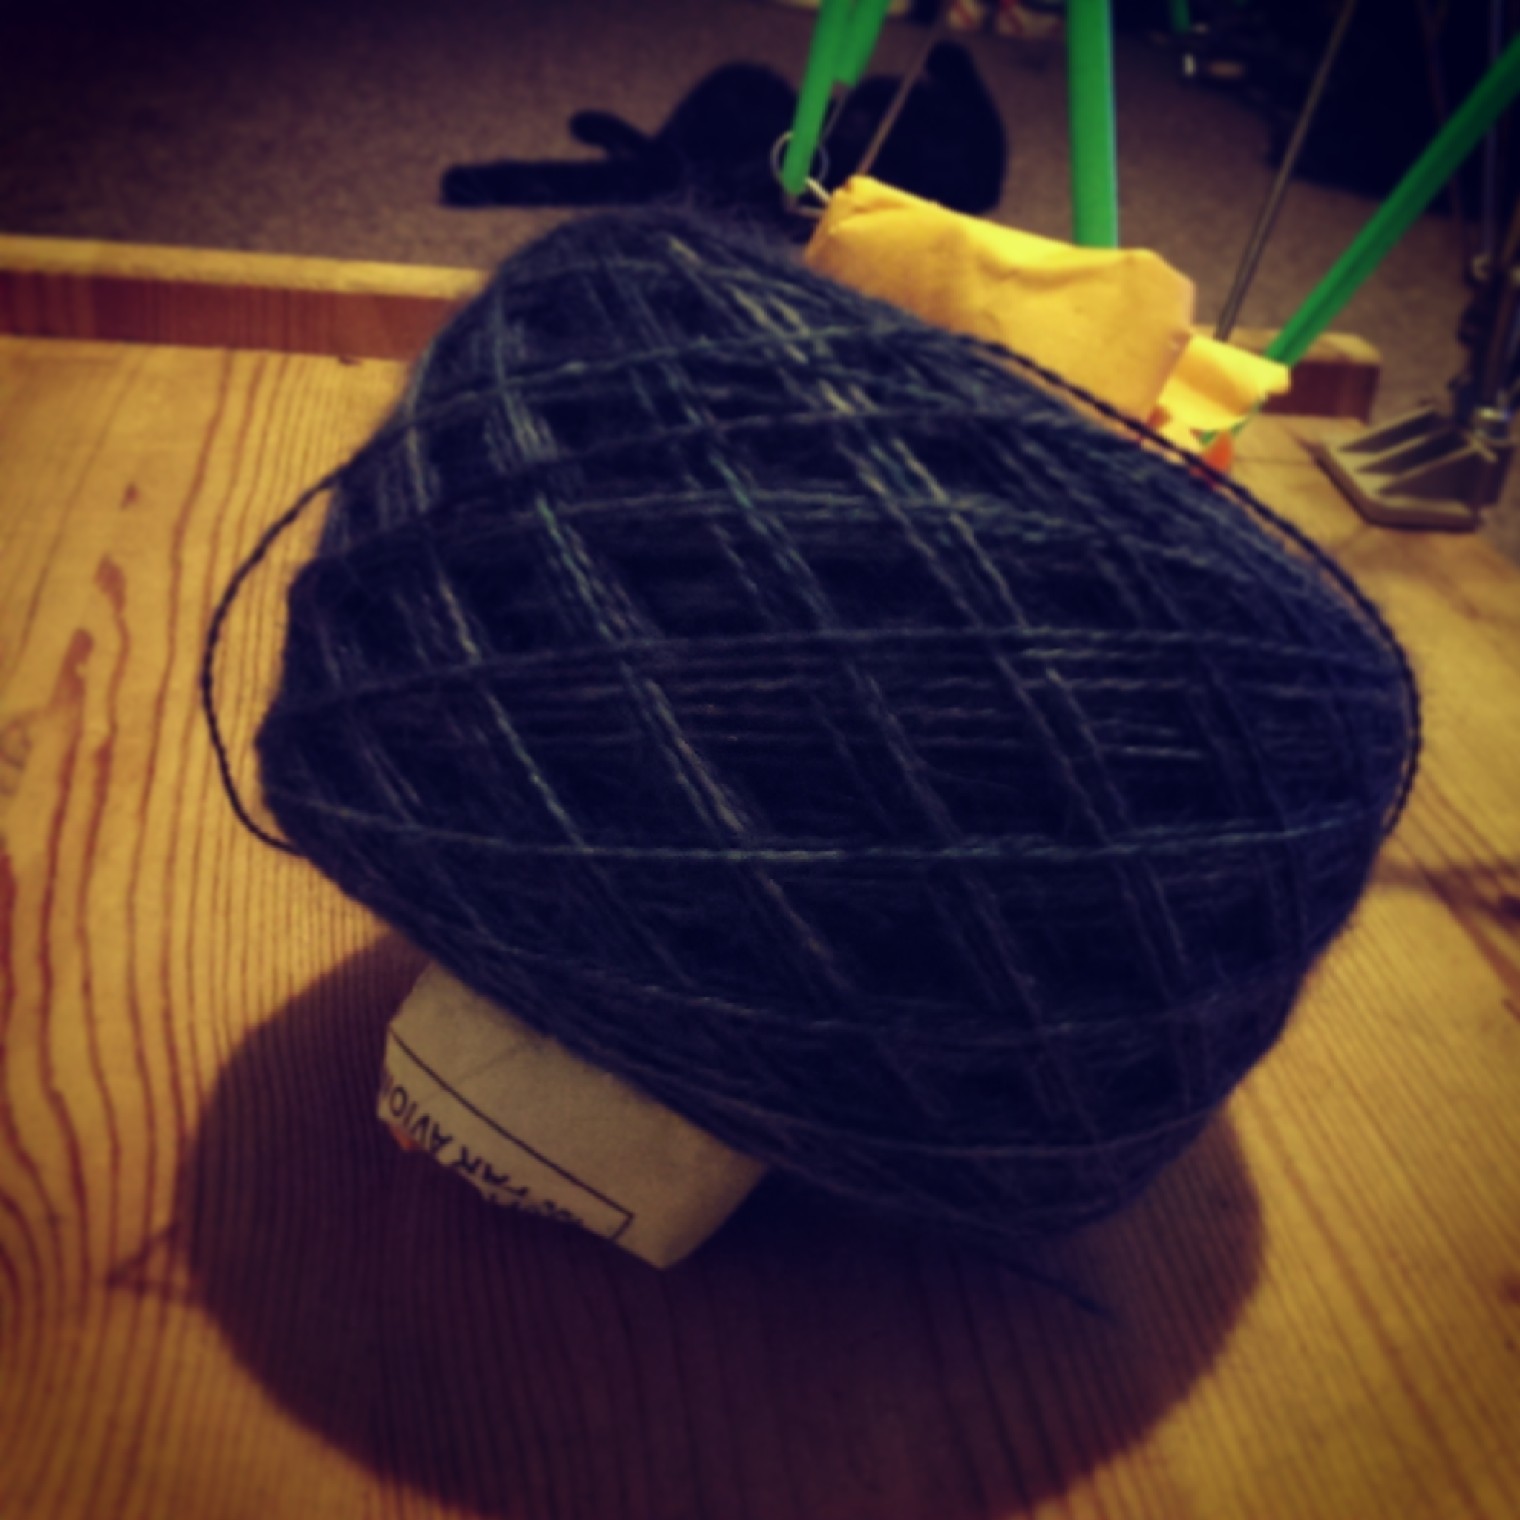 My ball of yarn!